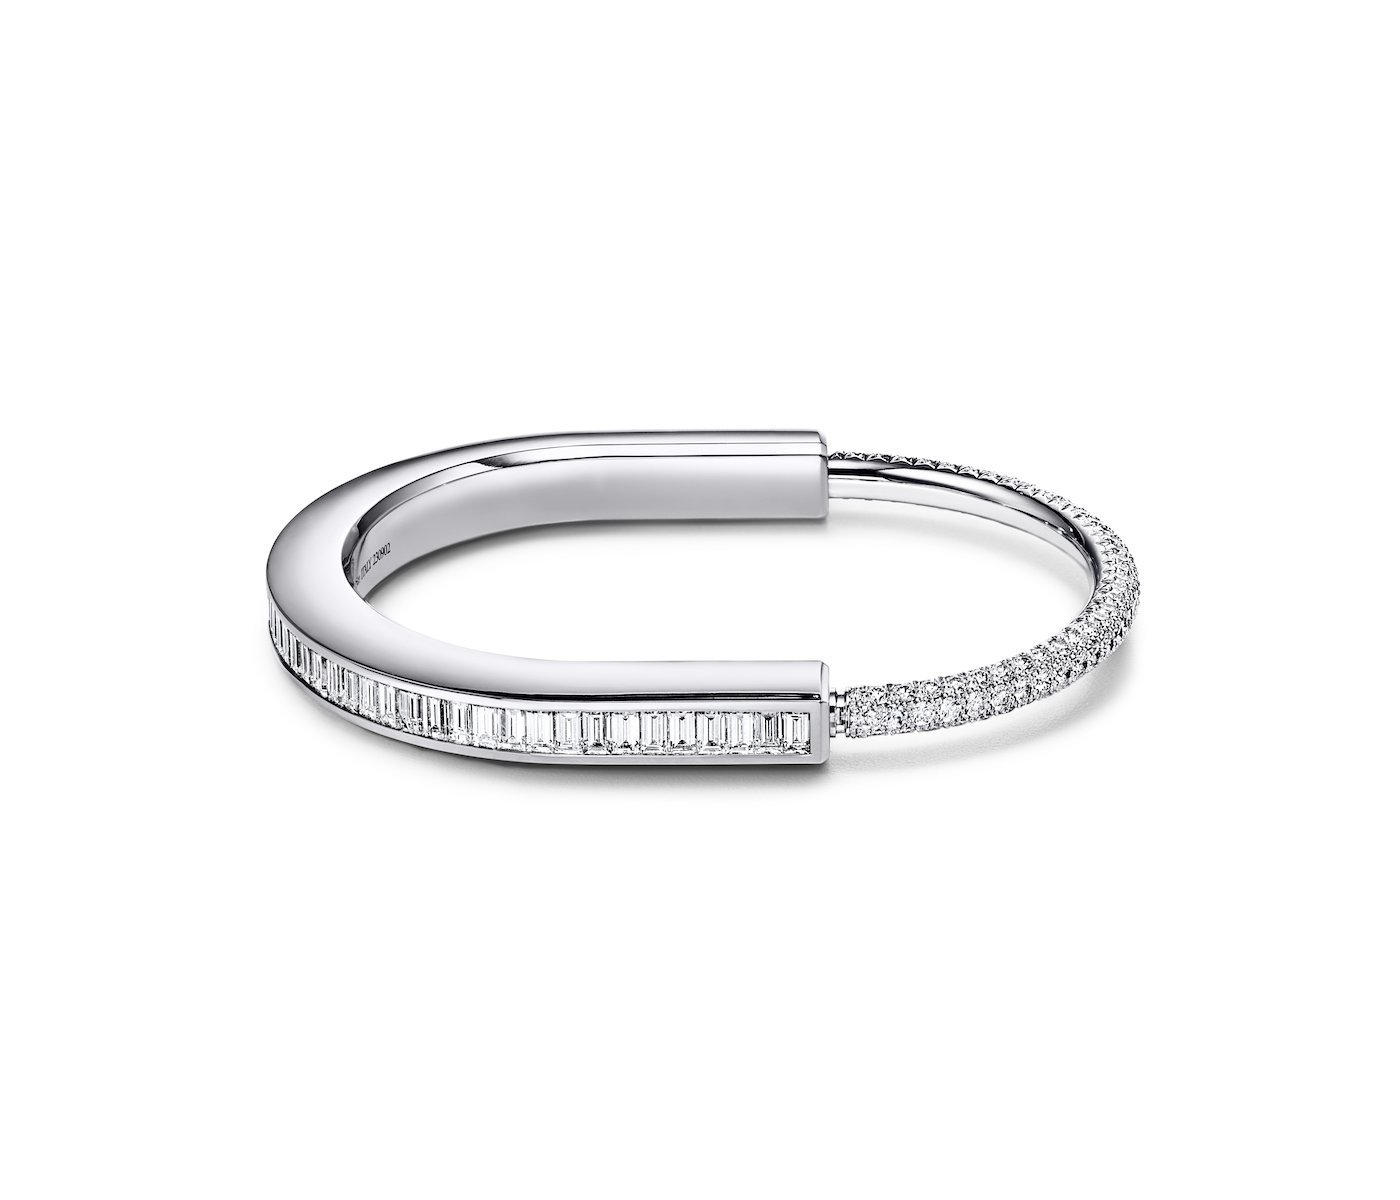 Tiffany Lock bracelet by Tiffany & Co.